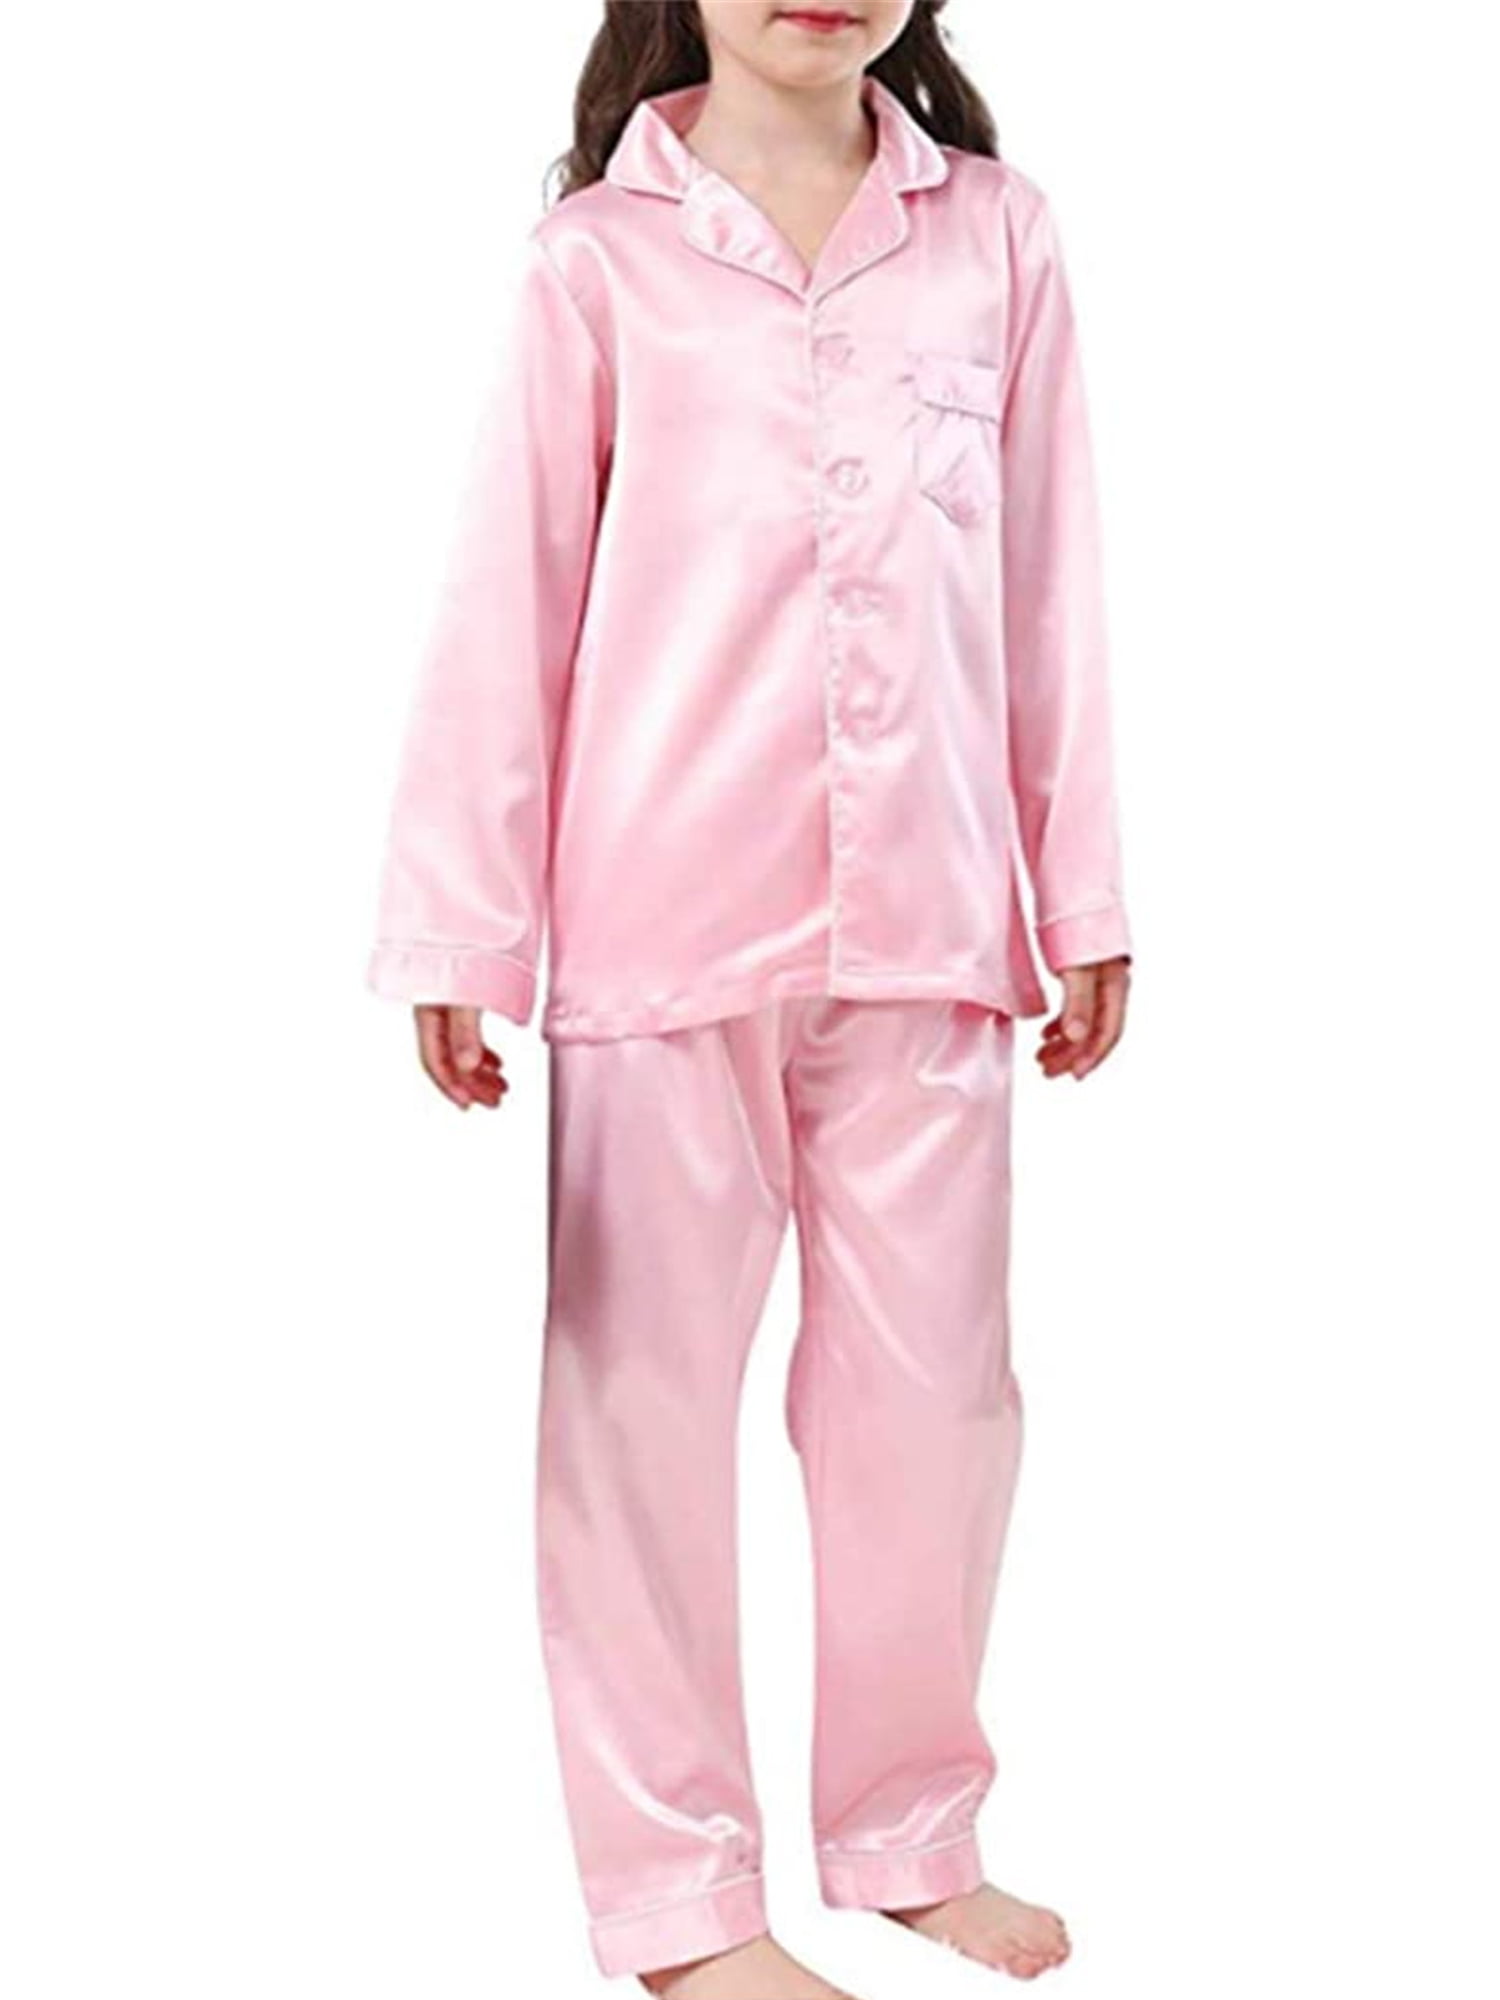 5-6 Years Pink Girls Official Nightie Nightdress Nightwear Age 4-10 Years LOL Surprise 